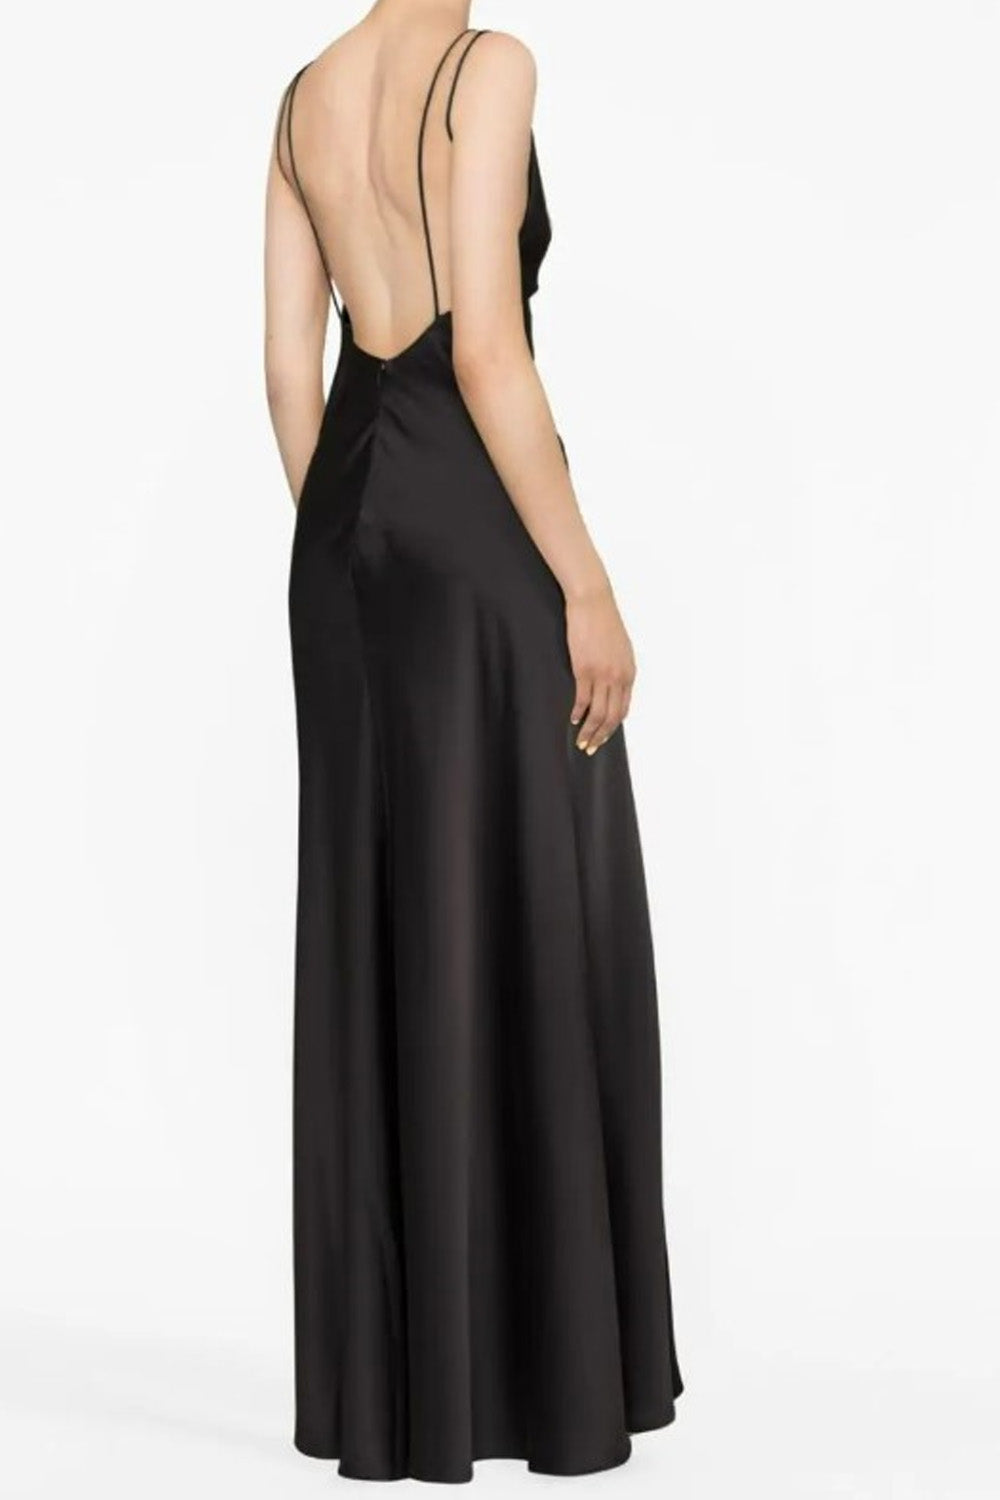 Eclipsia Black Dress